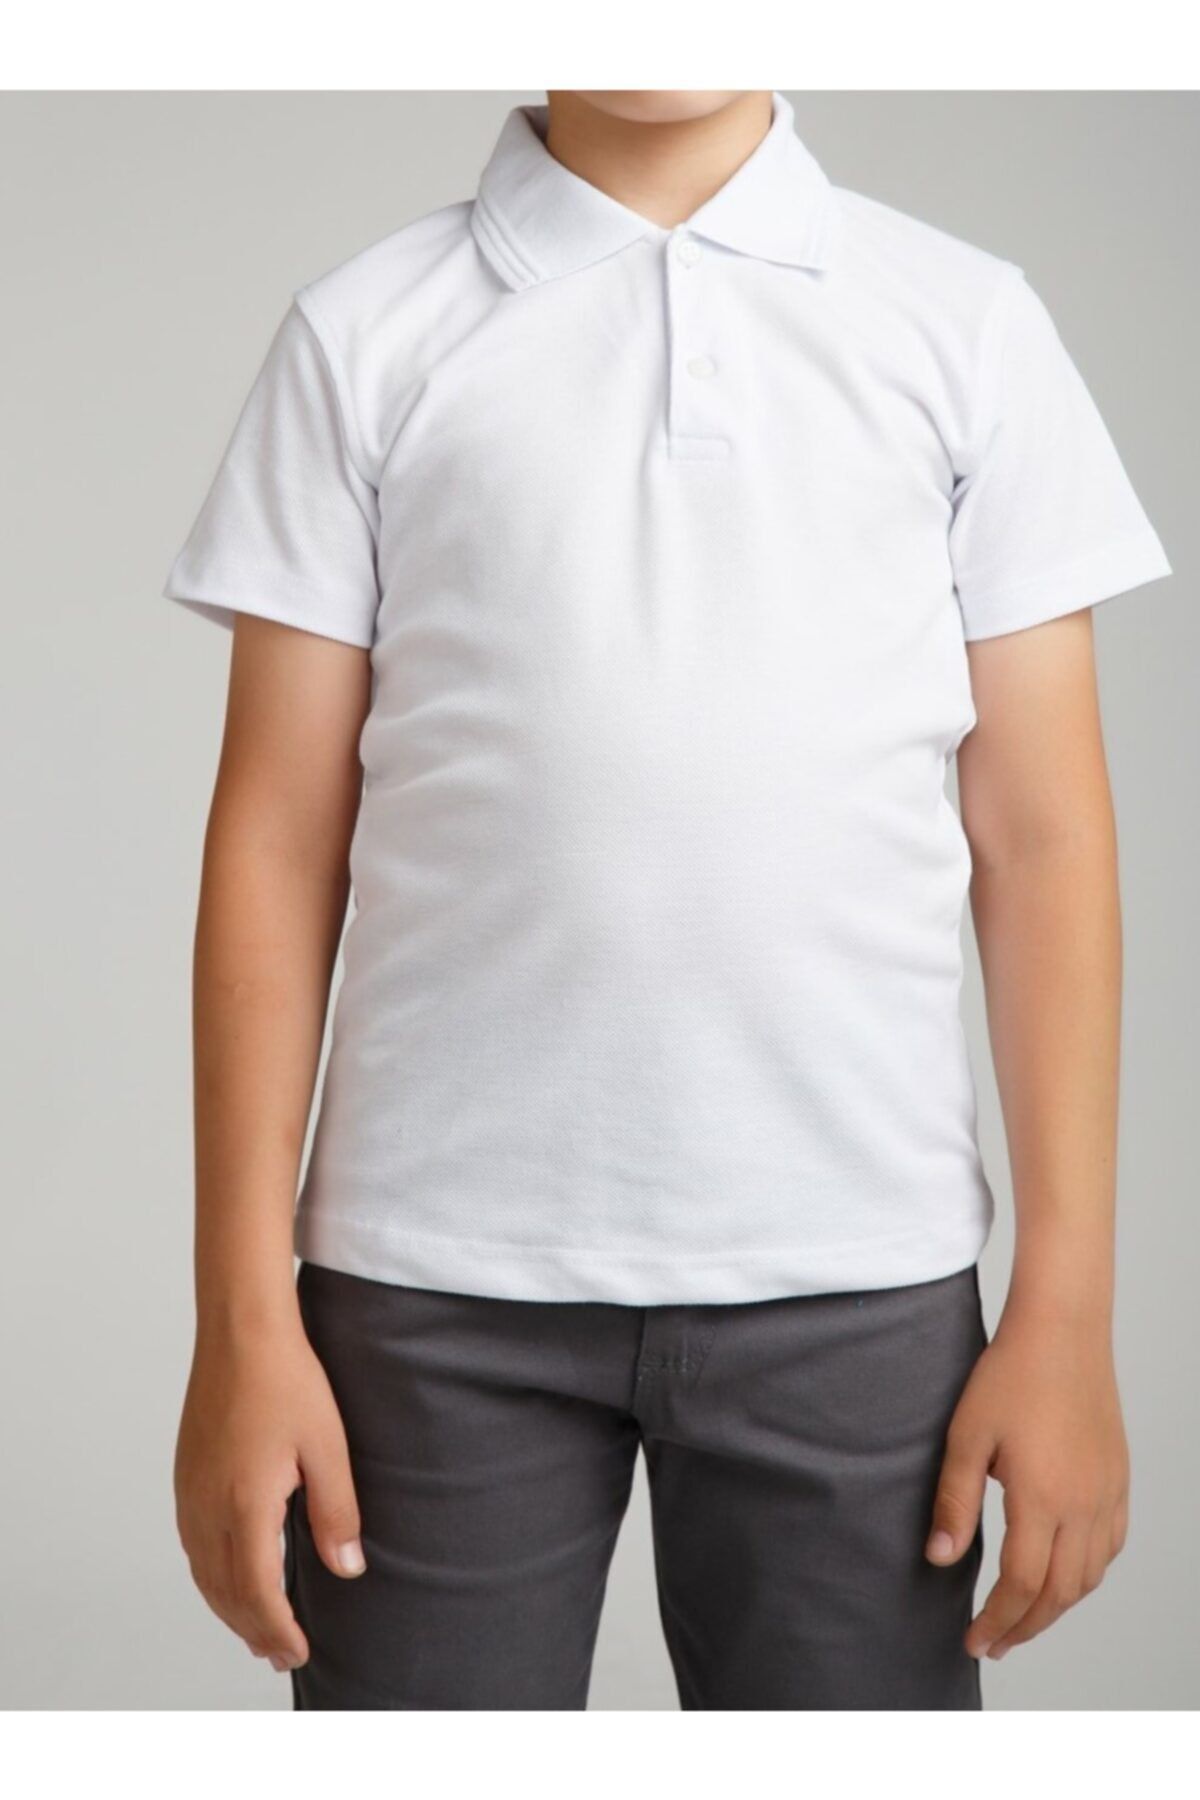 NACAR STORE Erkek Çocuk Polo Yaka Kısa Kol Okul T-shirt